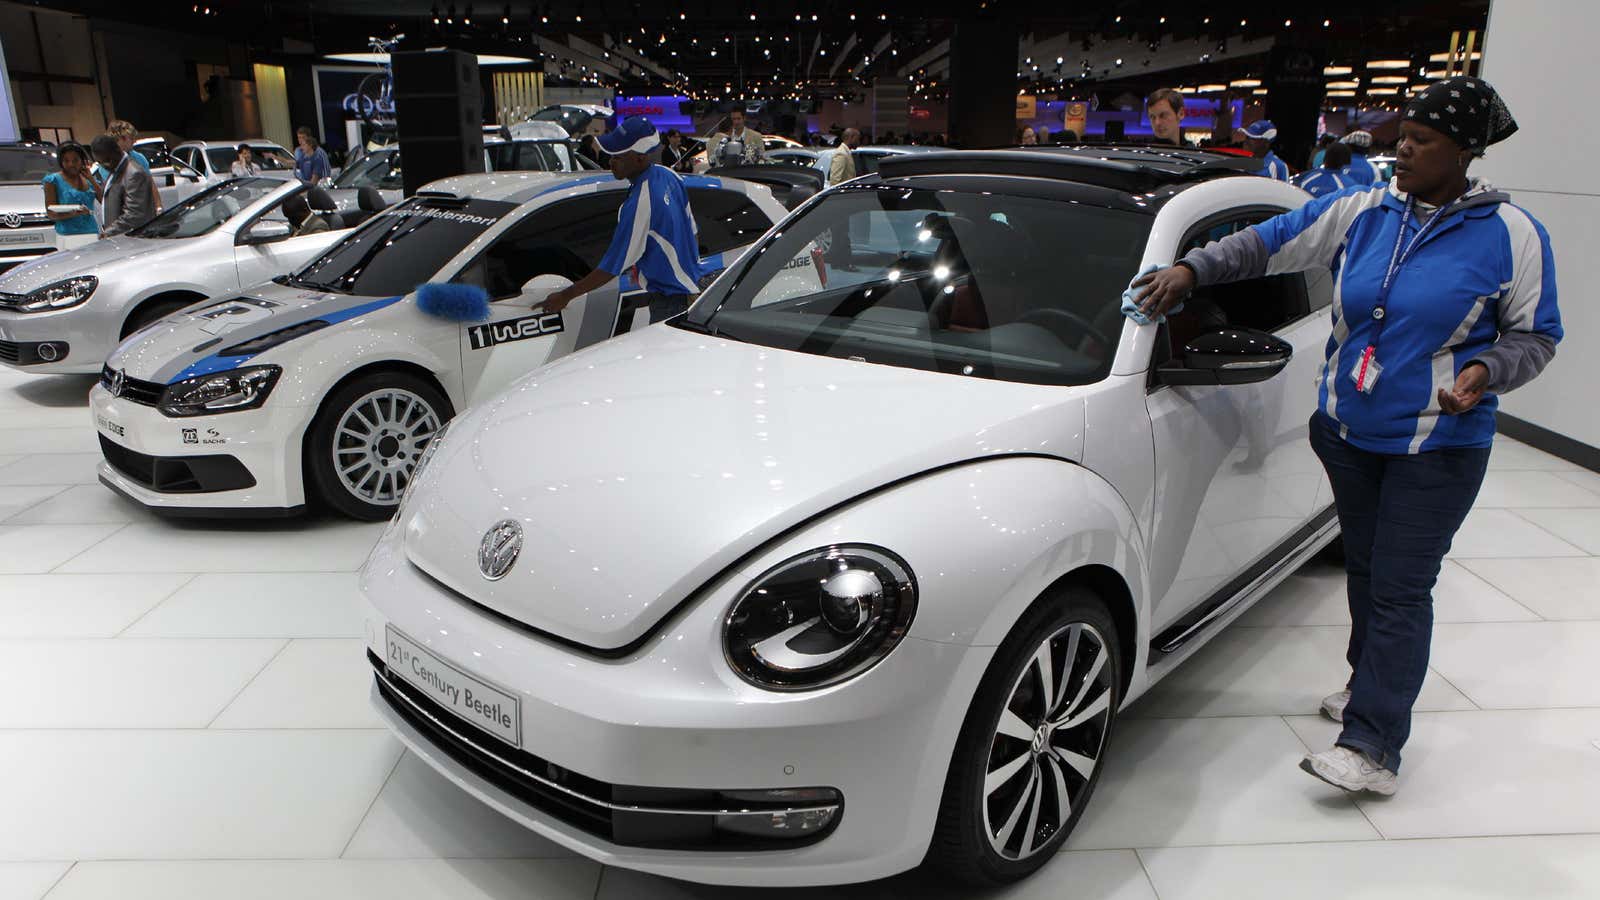 Volkswagen’s 21st Century Beetle during the Johannesburg International Motor Show.